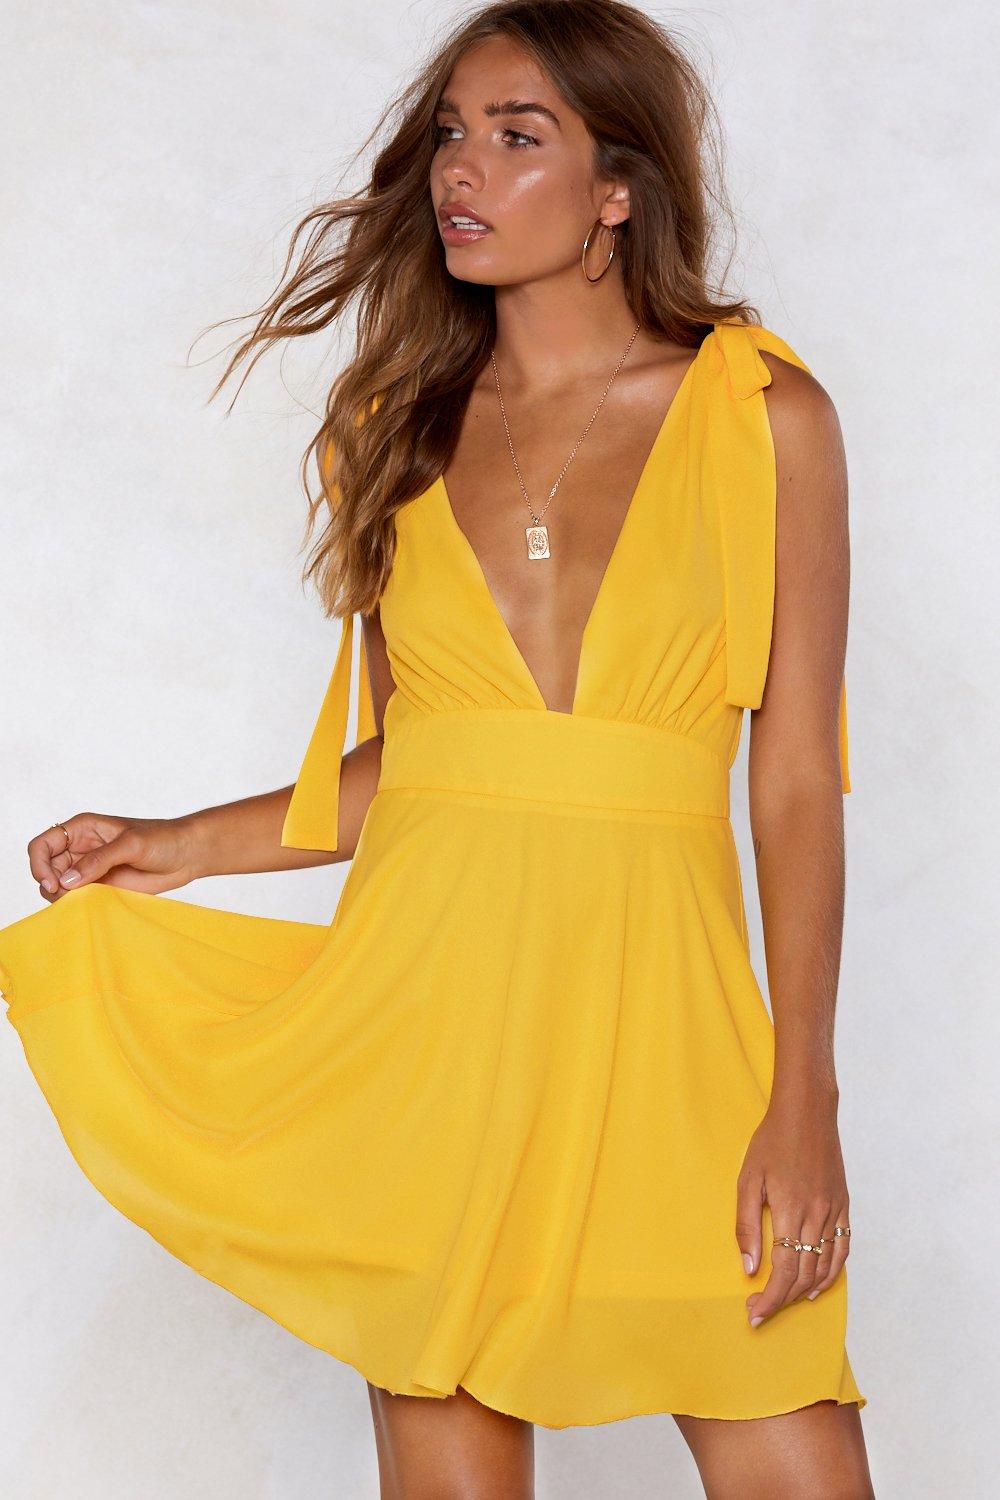 nasty gal yellow dress